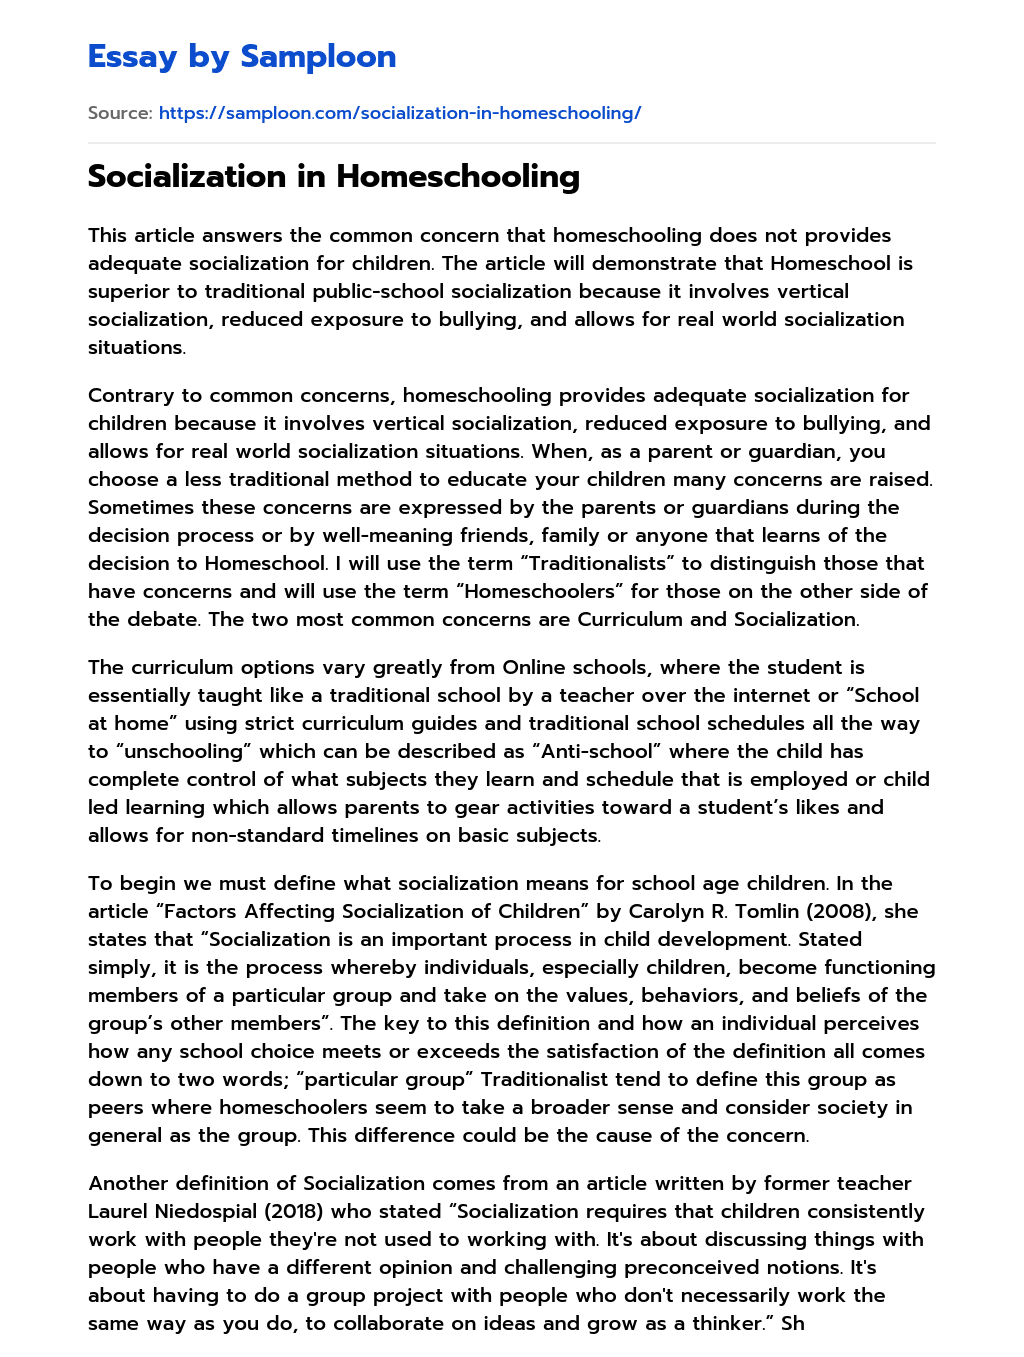 Socialization in Homeschooling essay